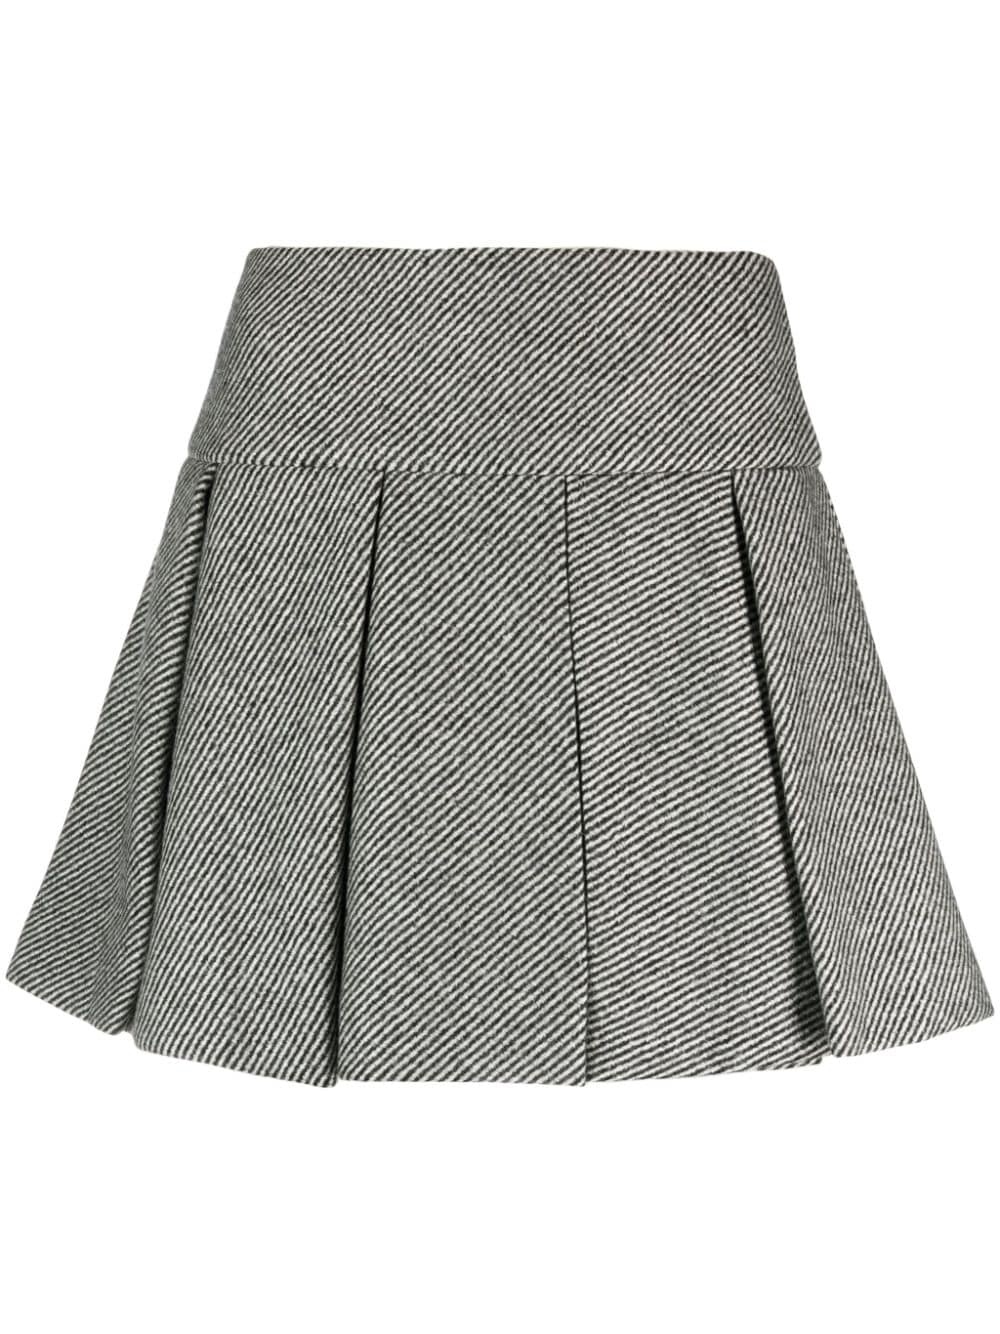 Palto pleated virgin wool skirt - 1